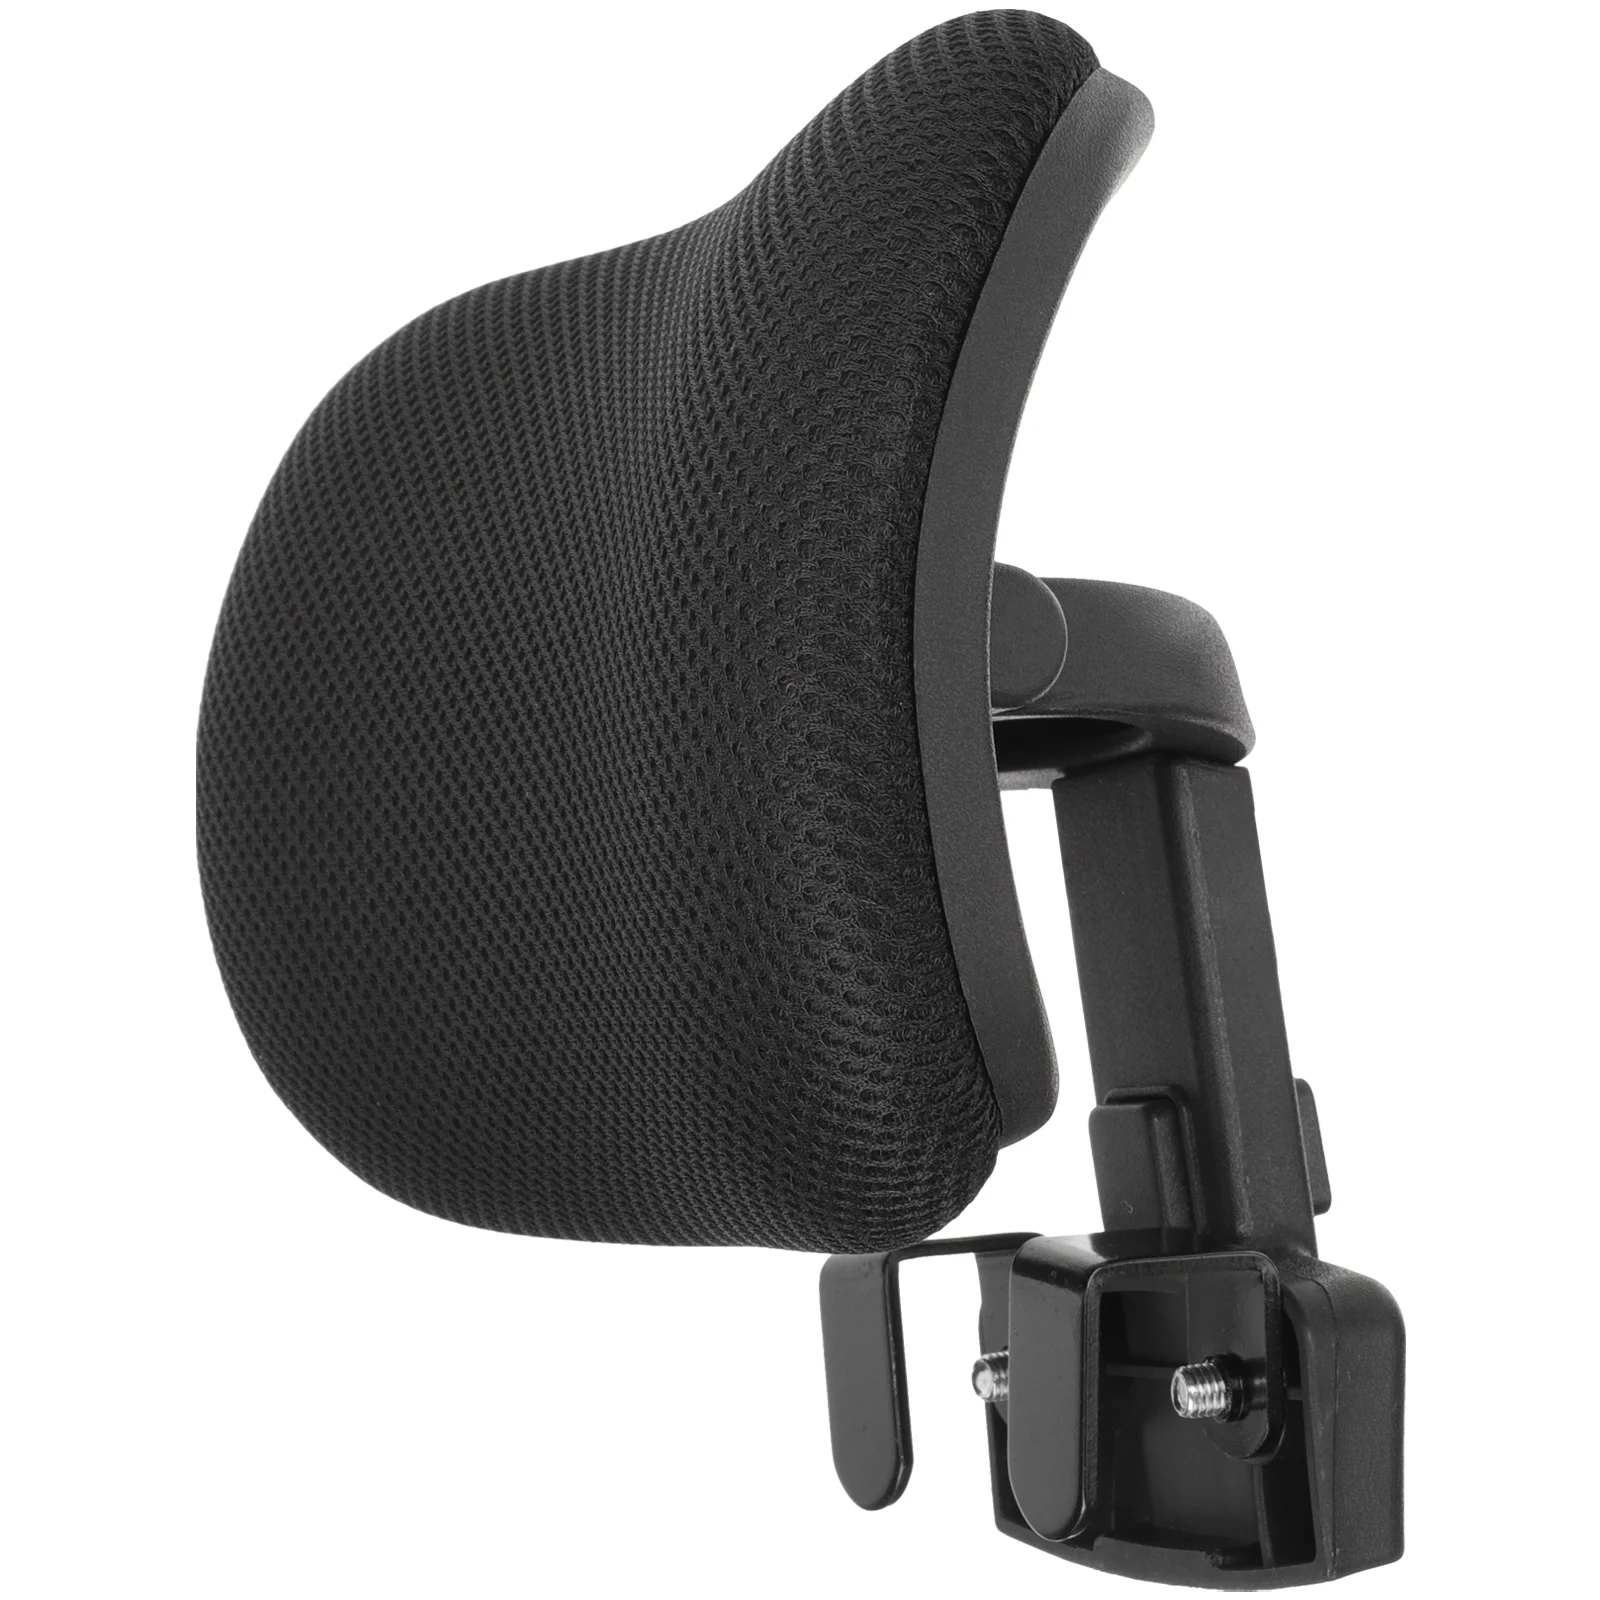 Leisure Mat Neck Protection Chair Head Pillows Lift Headrest Retrofit Cushion Comfortable Fabric Computer Office Travel